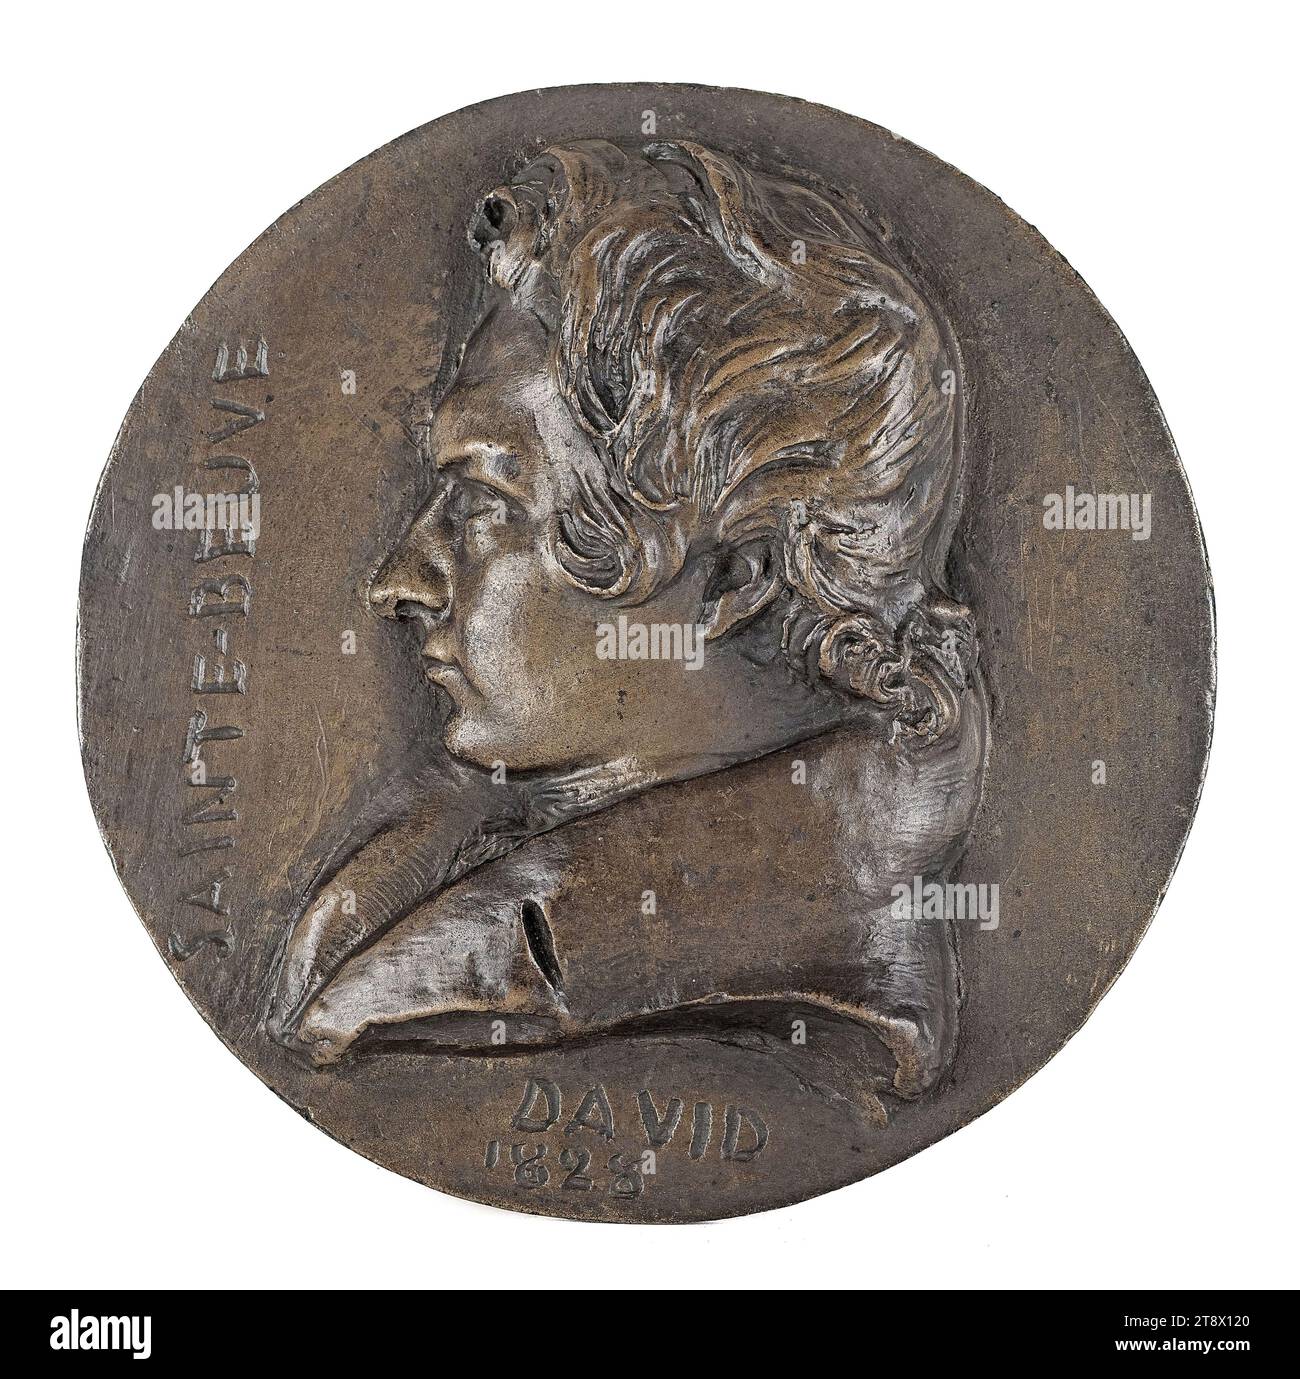 Portrait of Charles-Augustin Sainte-Beuve (1788-1869), poet and critic, David d'Angers, Pierre-Jean, Sculptor, In 1828, 19th century, Sculpture, Medallion (sculpture), Dimensions - Work: Diameter: 12 cm Stock Photo